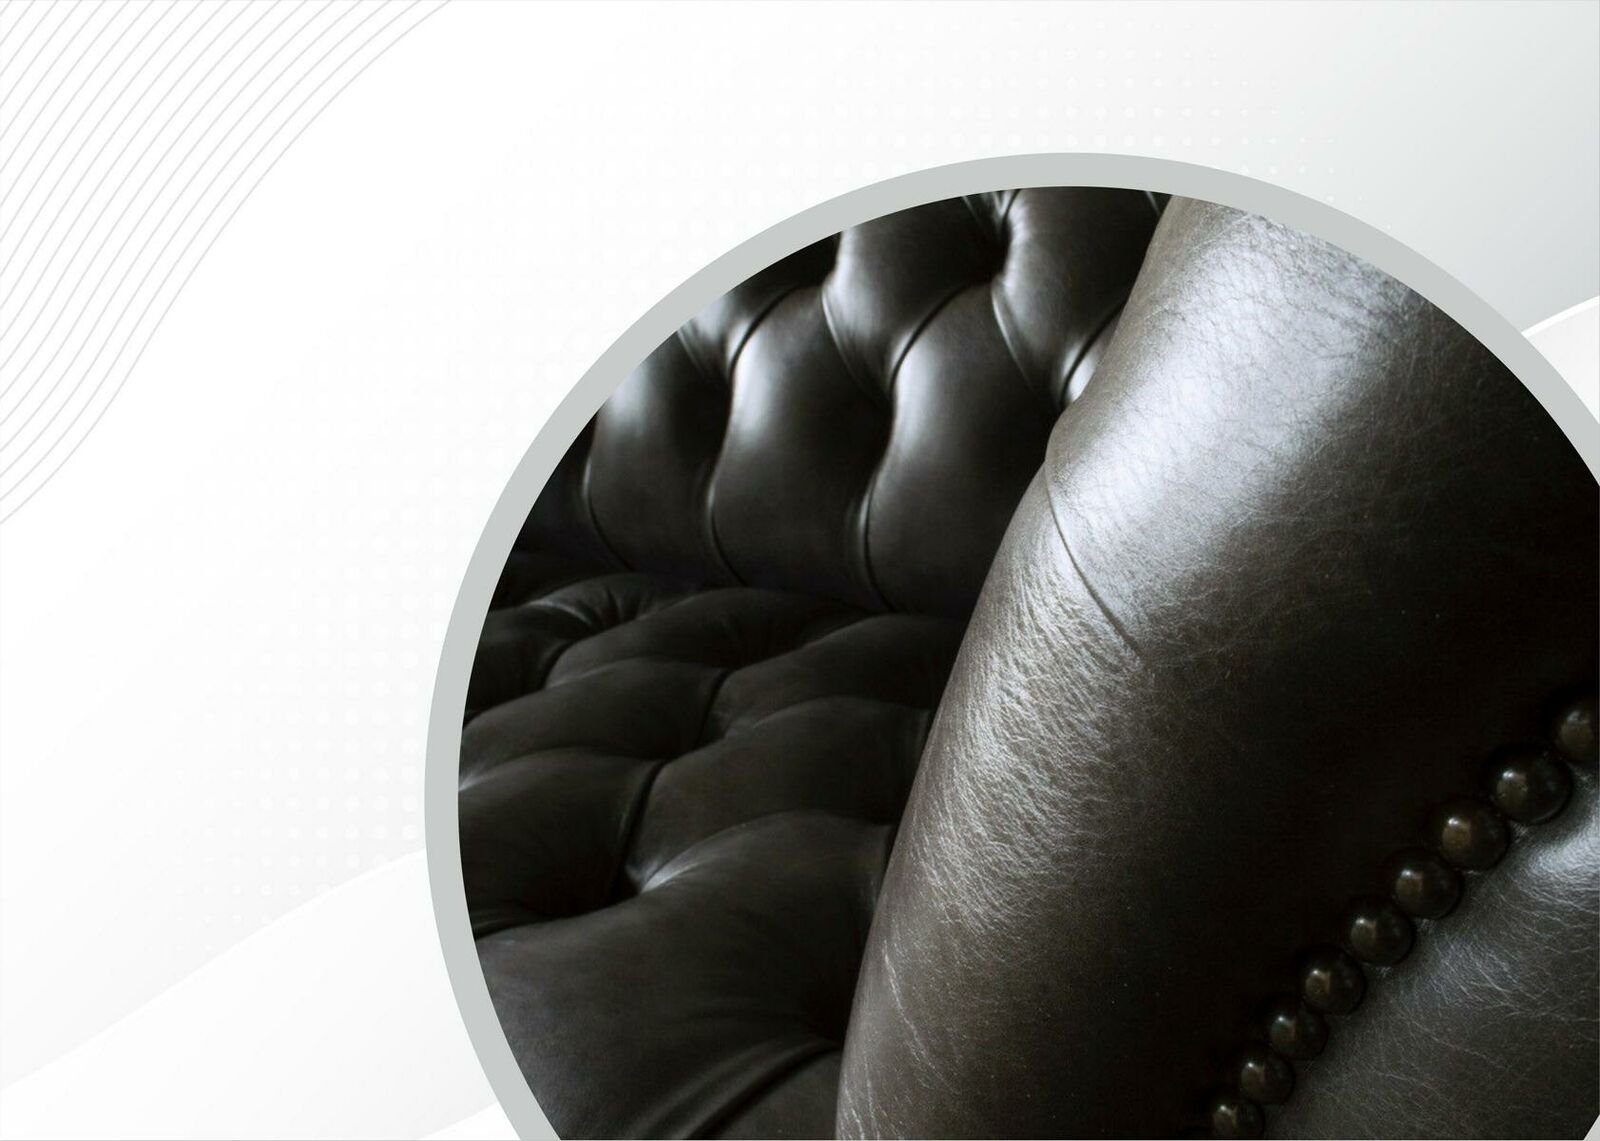 Neu, Europe klassische Couch Made Modern in Chesterfield-Sofa 3-er Sofa luxus JVmoebel Chesterfield Schwarze